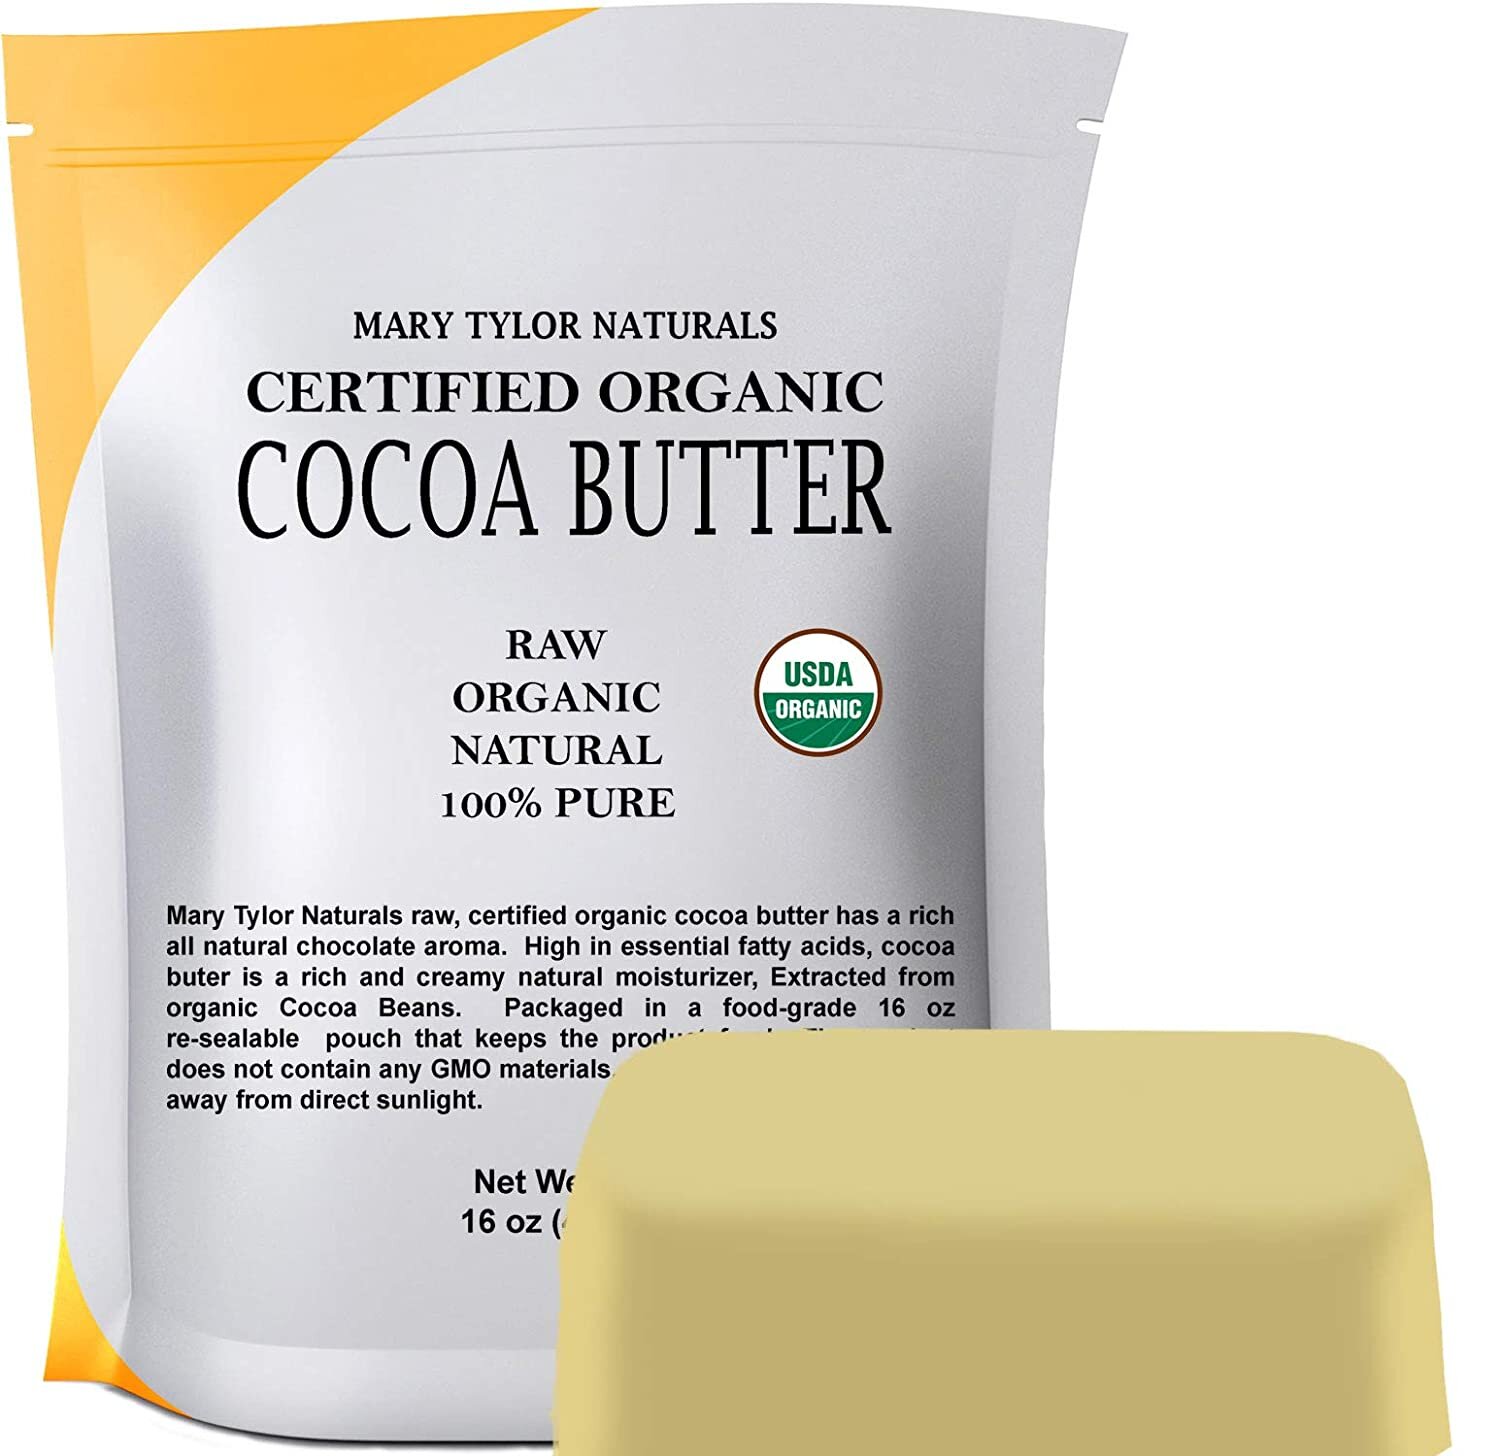 Organic Cocoa Butter.jpg